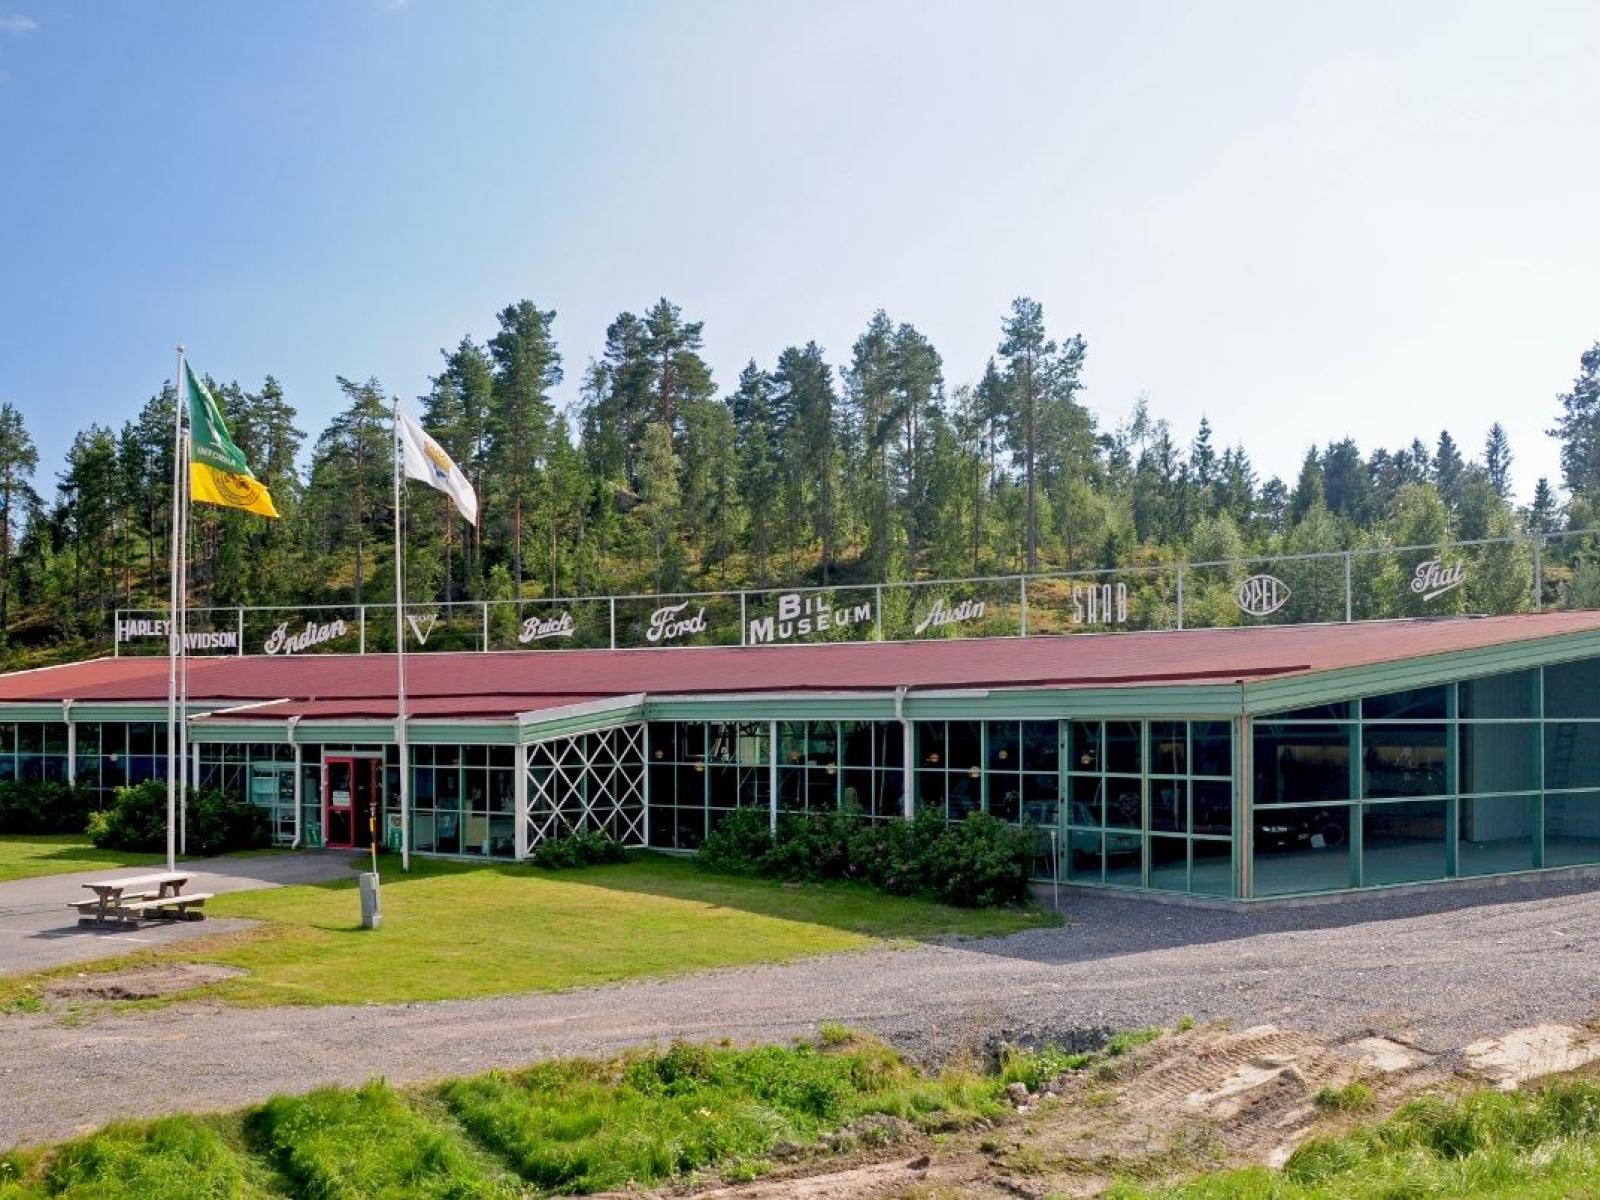 Ådalens veteranbilsmuseum